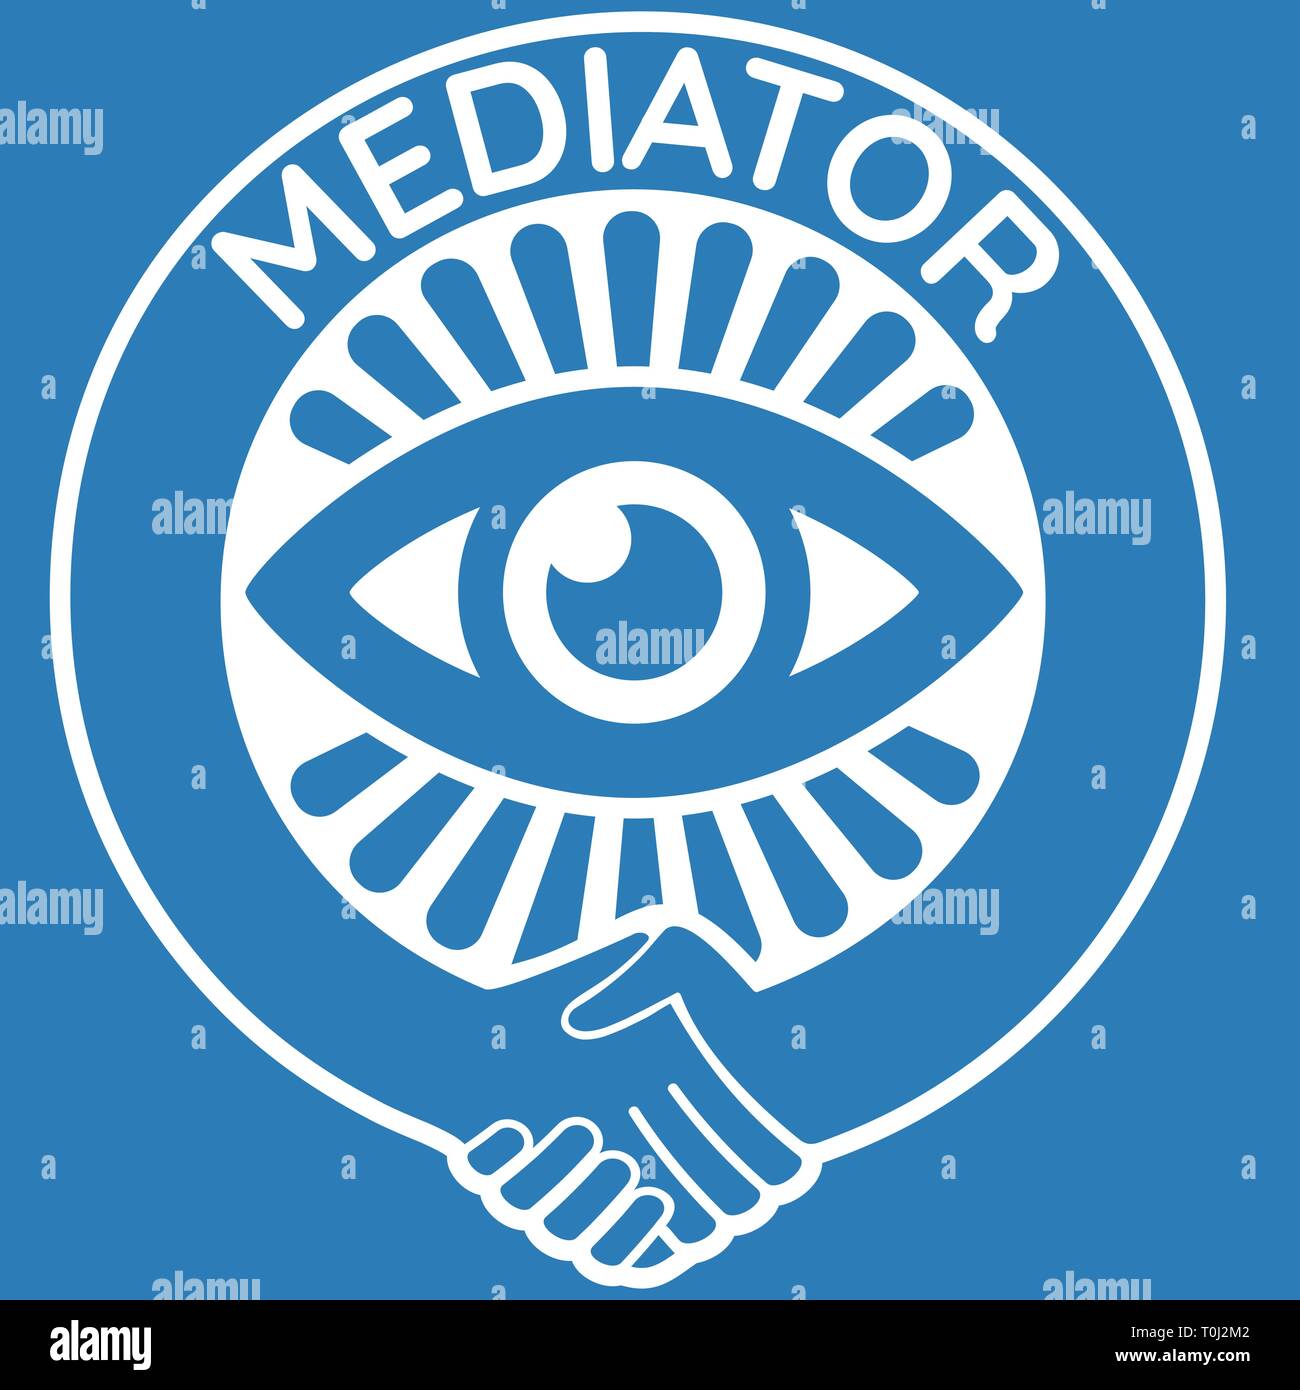 Mediator badge or seal design template Stock Vector